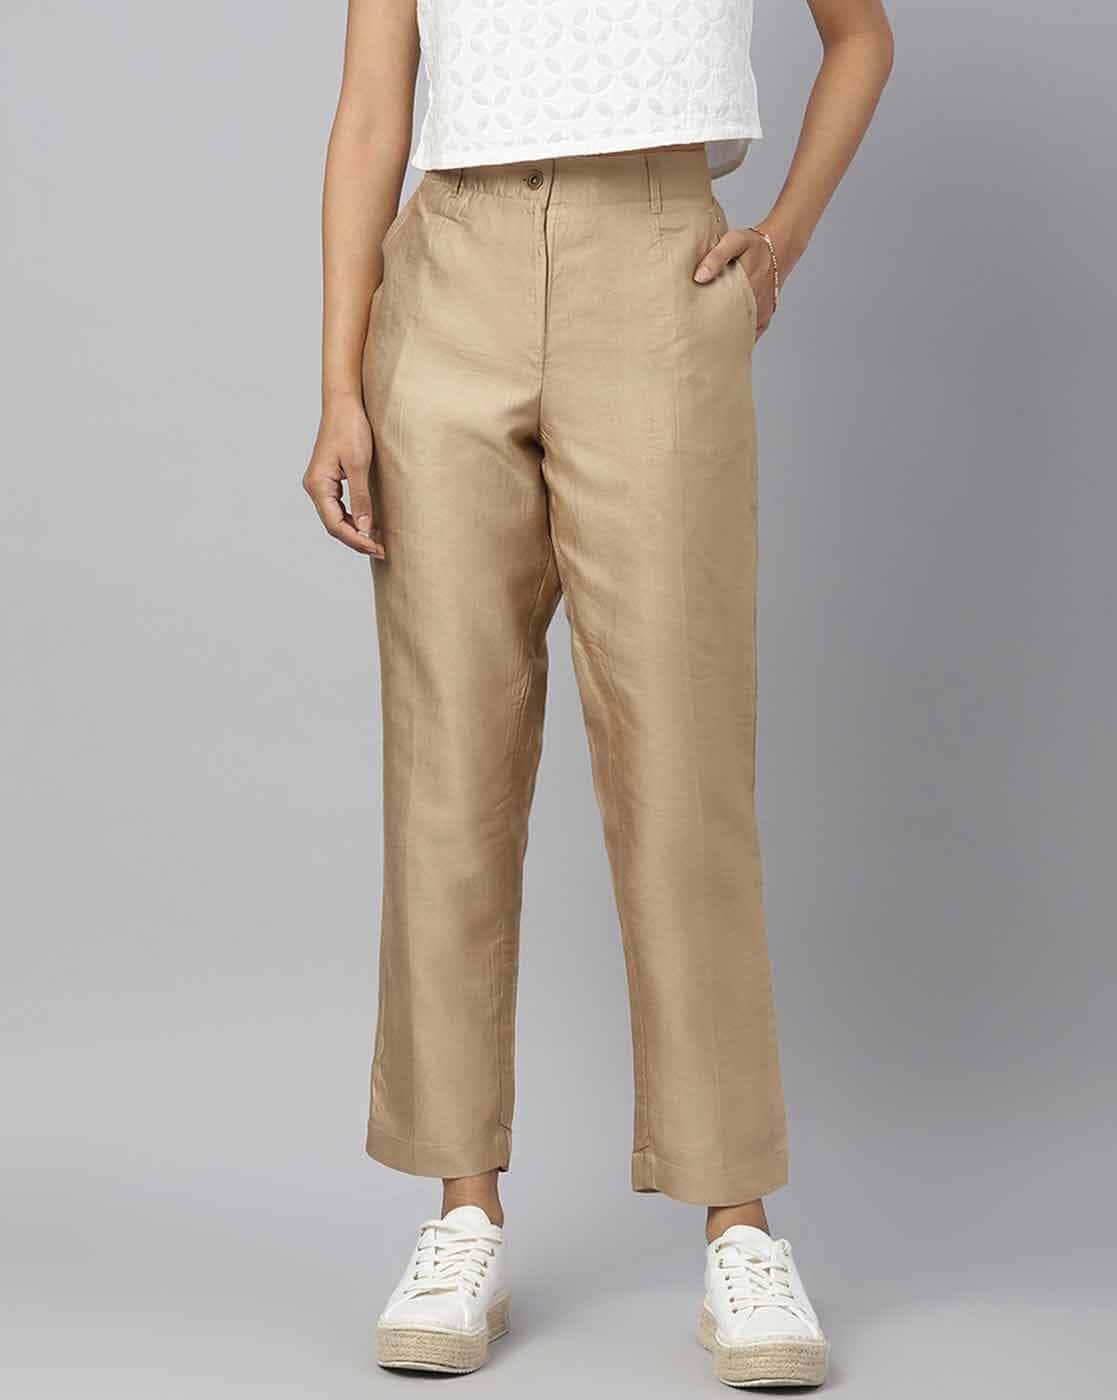 Buy Fabindia Women Dabu Printed Casual Pant Cotton_XS Indigo at Amazon.in